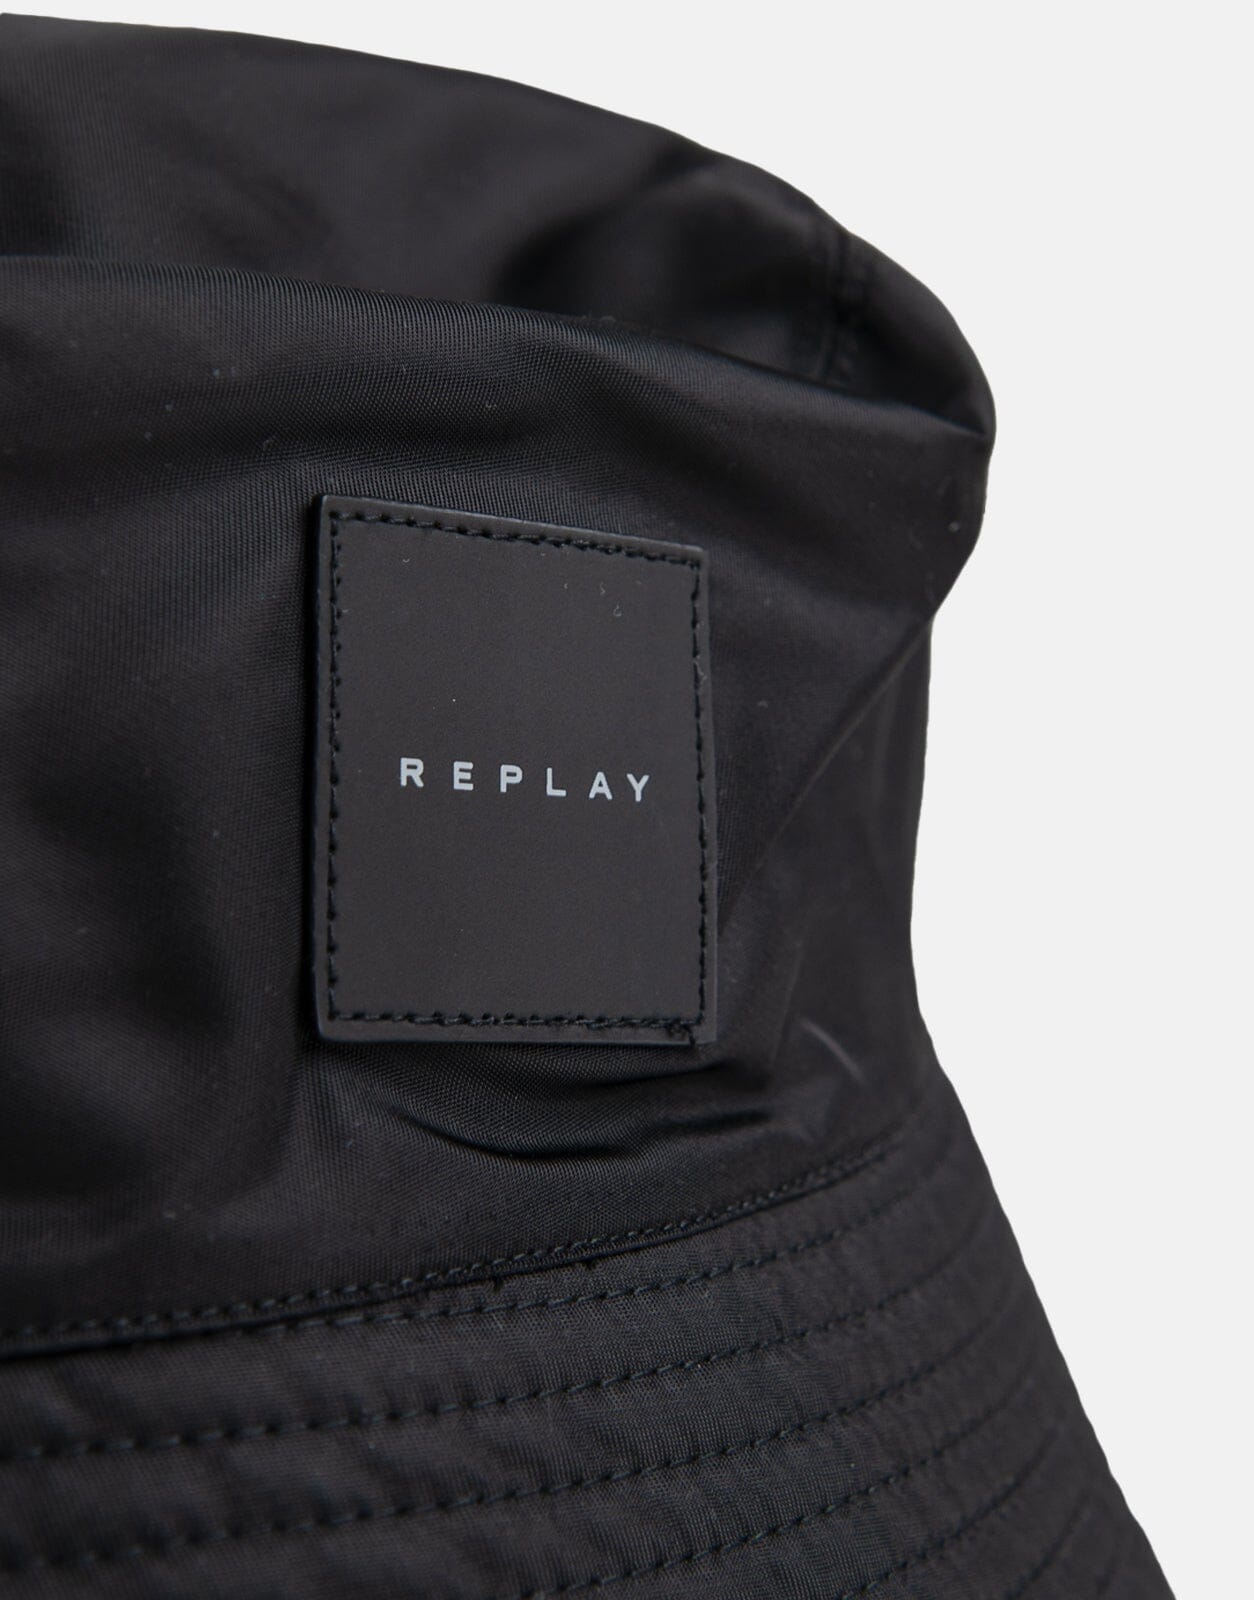 Replay Black Bucket Hat - Subwear